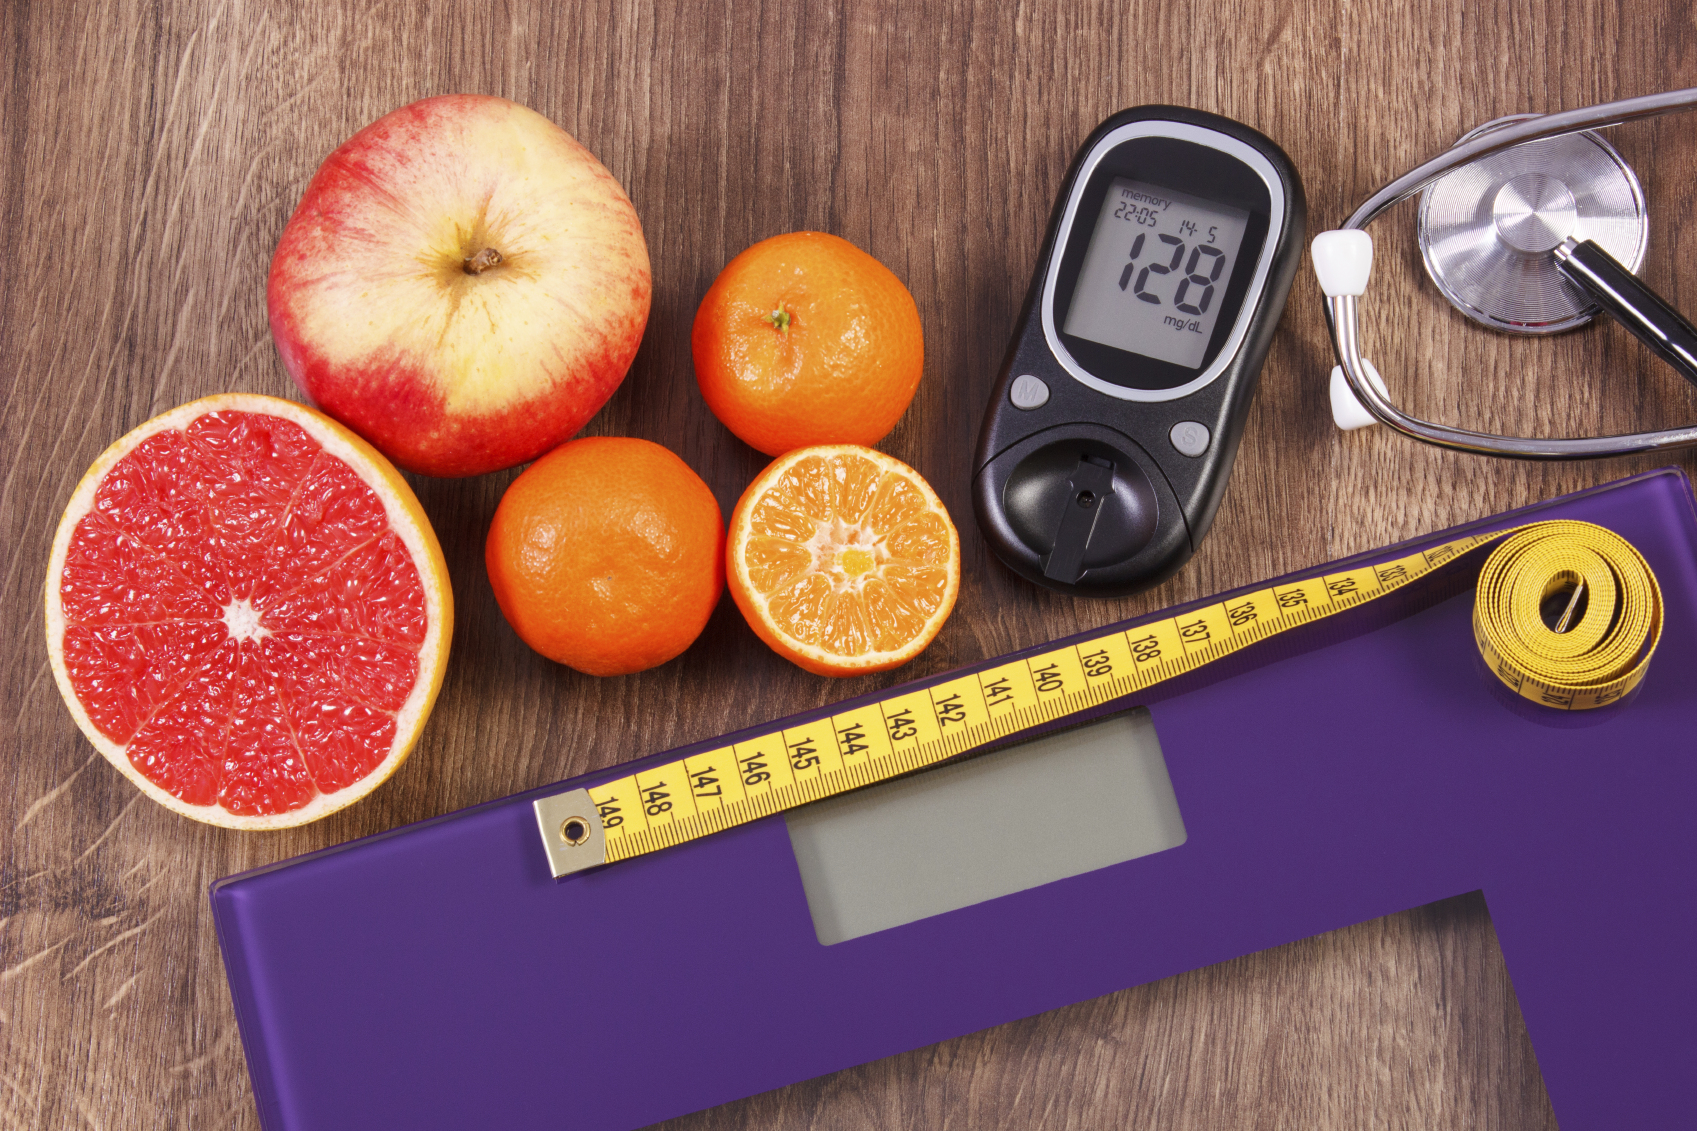 Do self-management programs for diabetes really work?